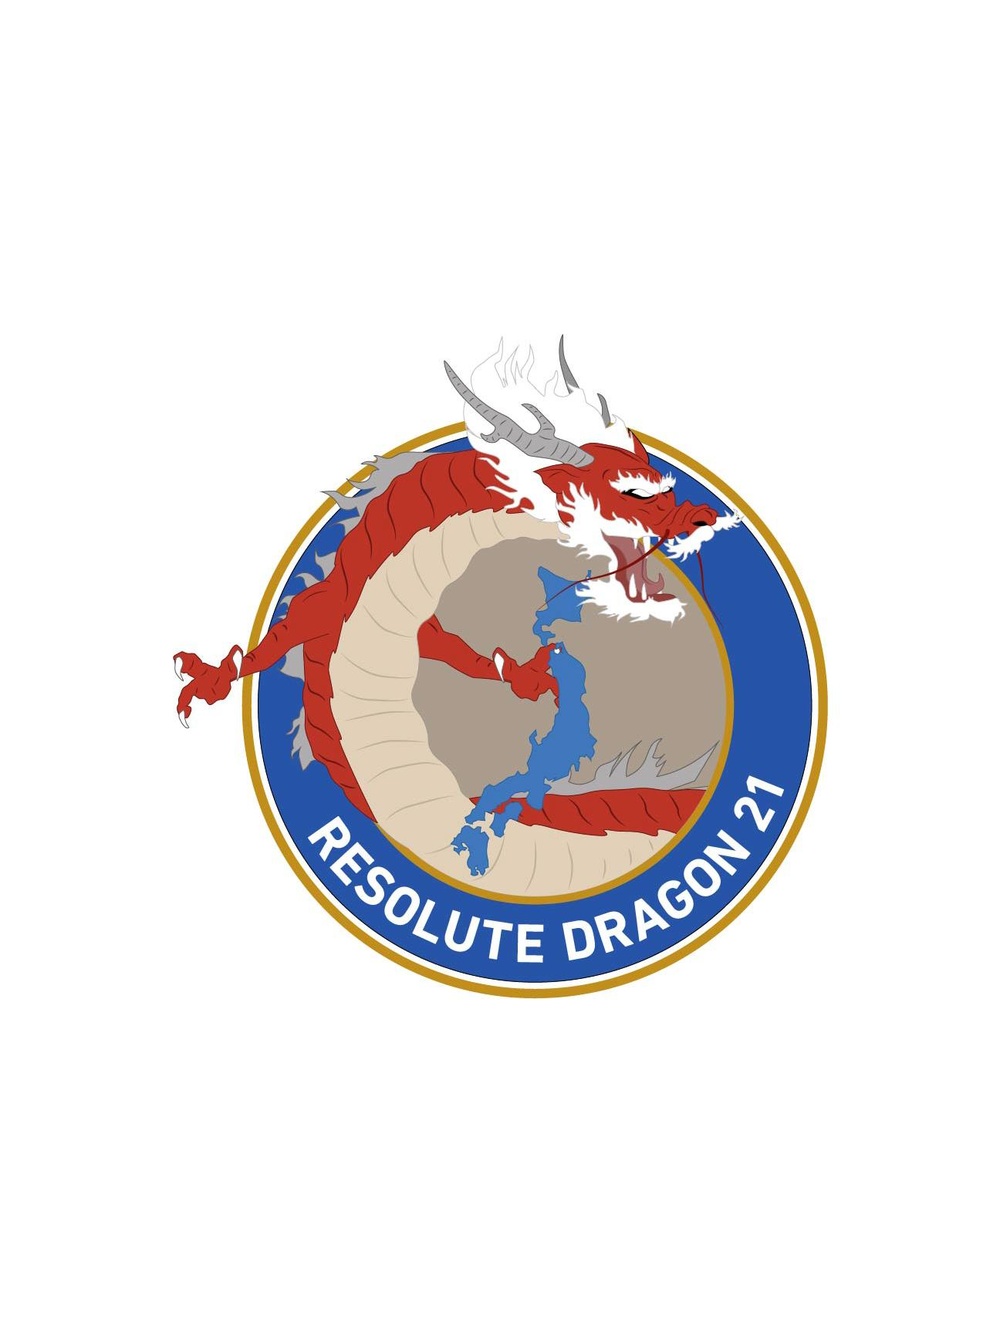 Resolute Dragon Logo Concept Design